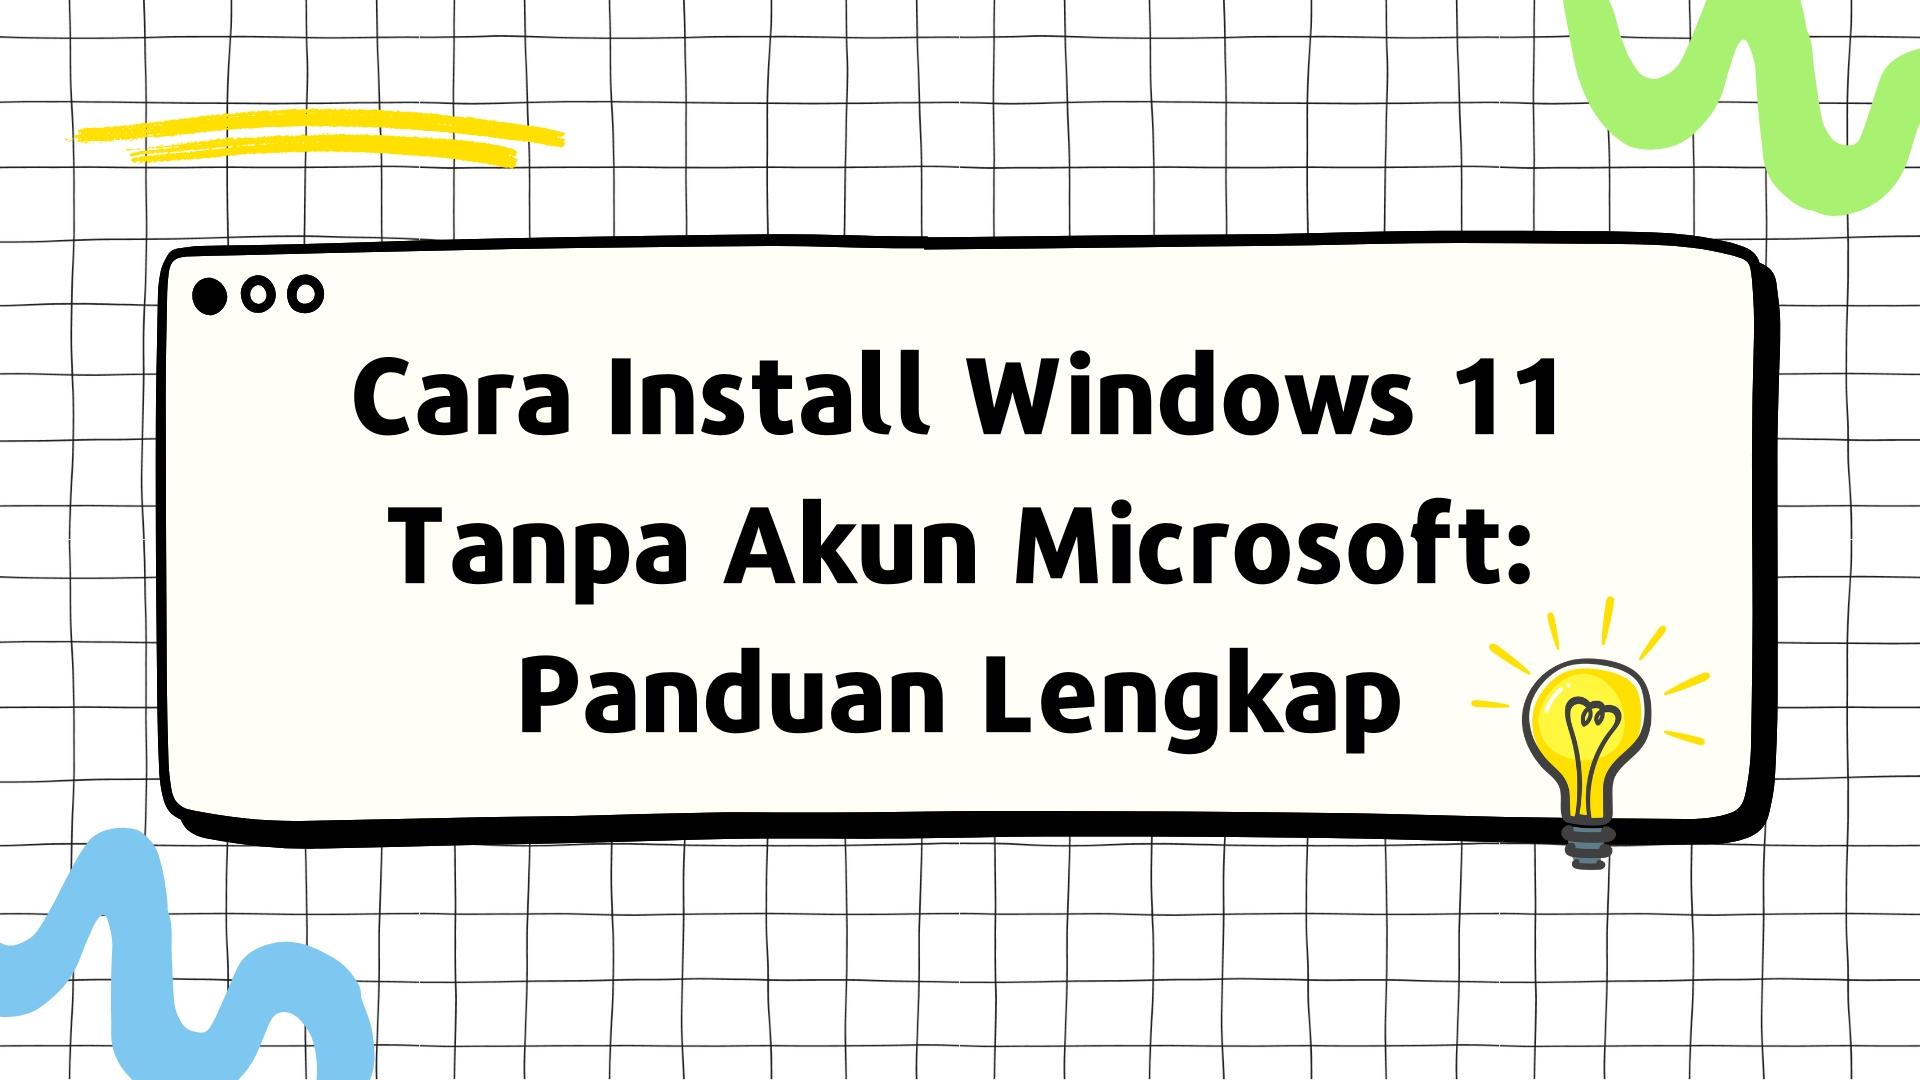 Thumbnail for article Cara Install Windows 11 Tanpa Akun Microsoft: Panduan Lengkap